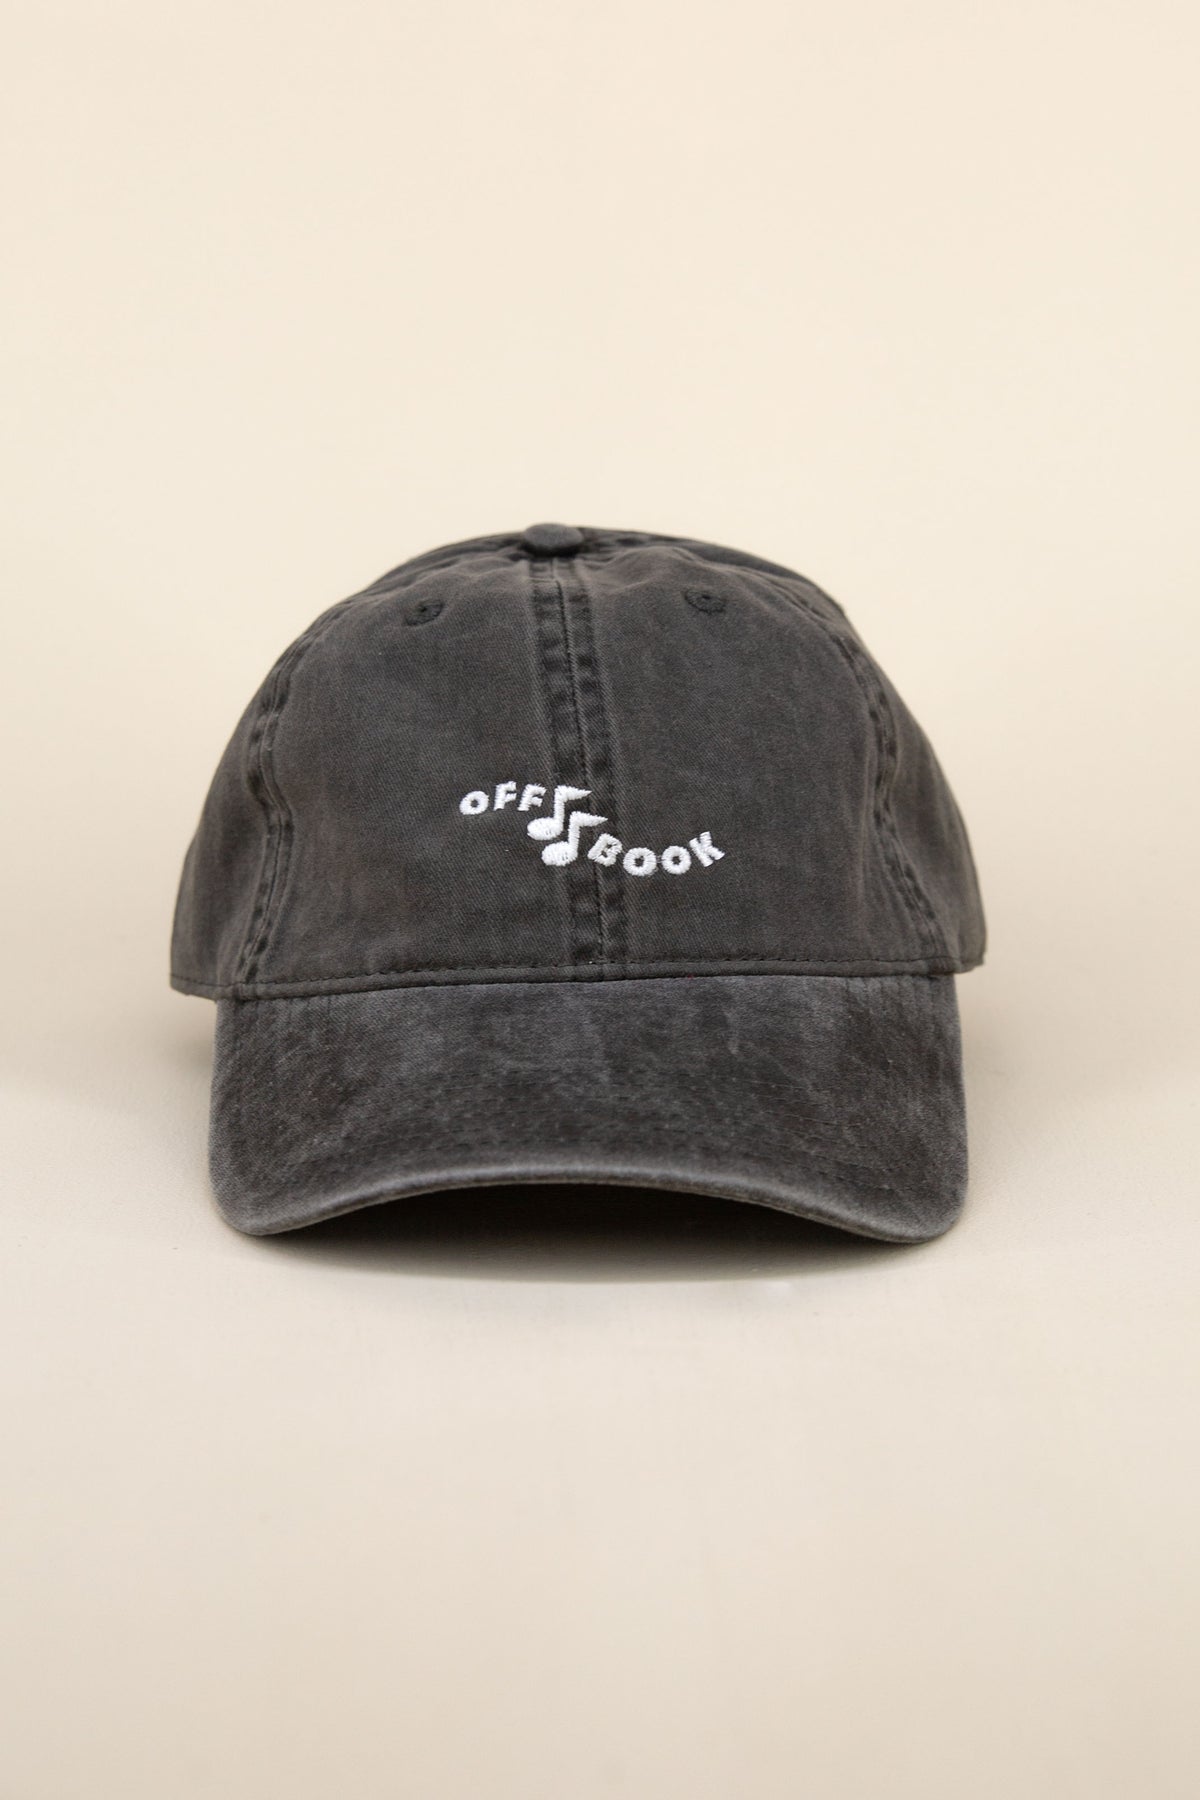 off book: logo hat